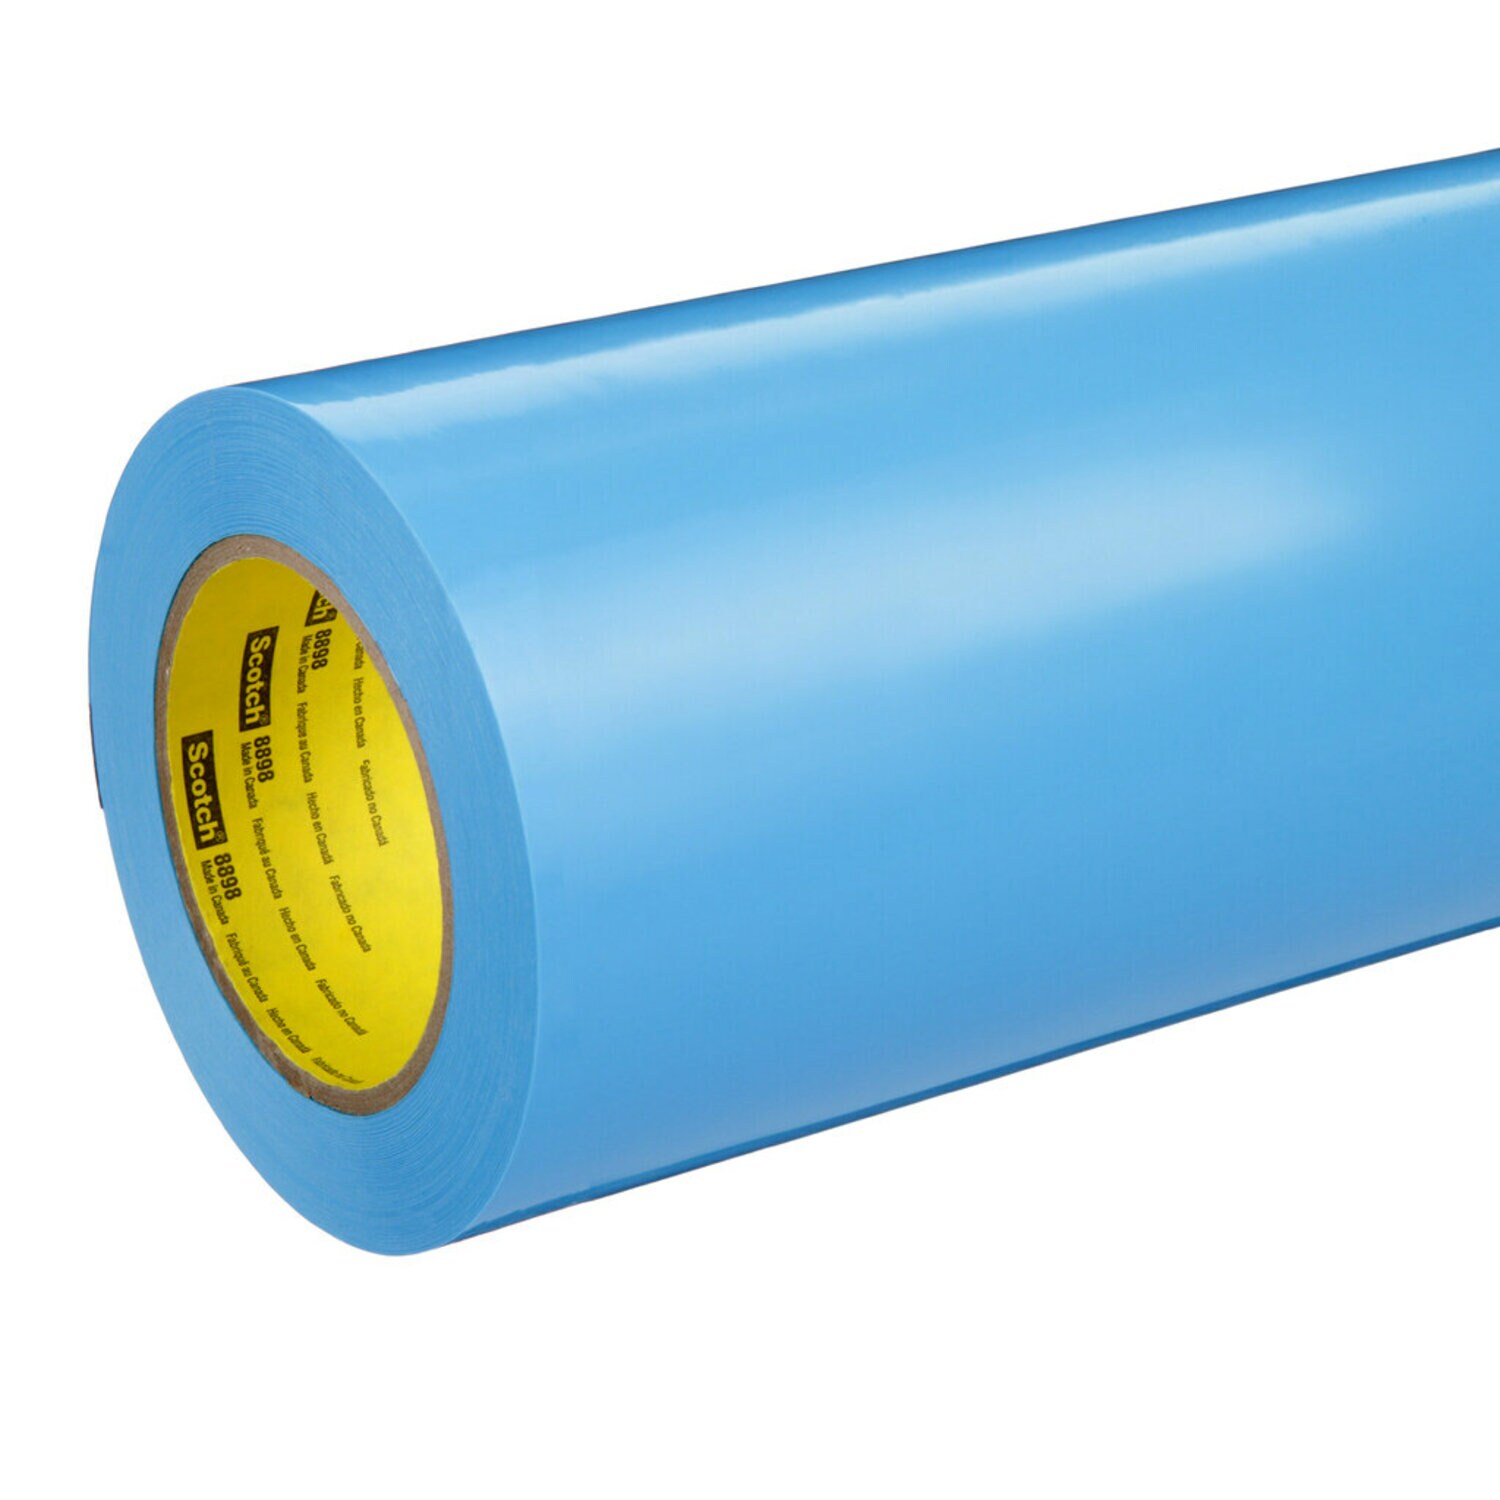 7000137386 - Scotch Strapping Tape 8898, Blue, 288 mm x 330 m, 4.6 mil, 1 roll per
case